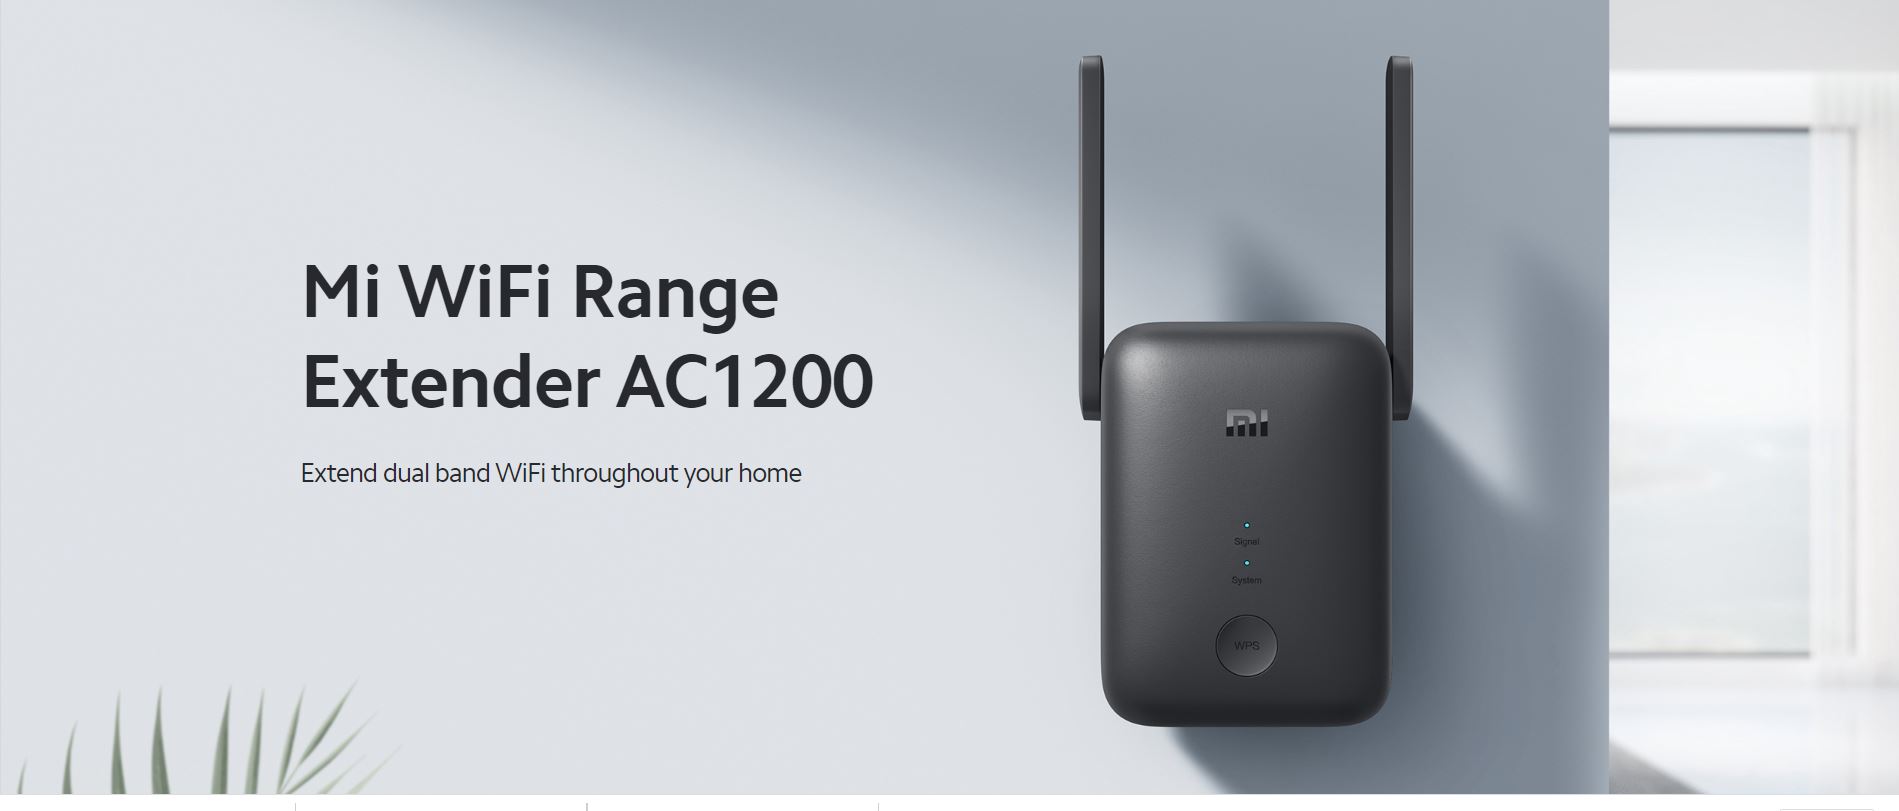 Xiaomi Mi WiFi Range Extender AC1200 RA75 - dual band WiFi - Ethernet Port - external antennas - AP mode - DVB4270GL - Amman Jordan - Pccircle